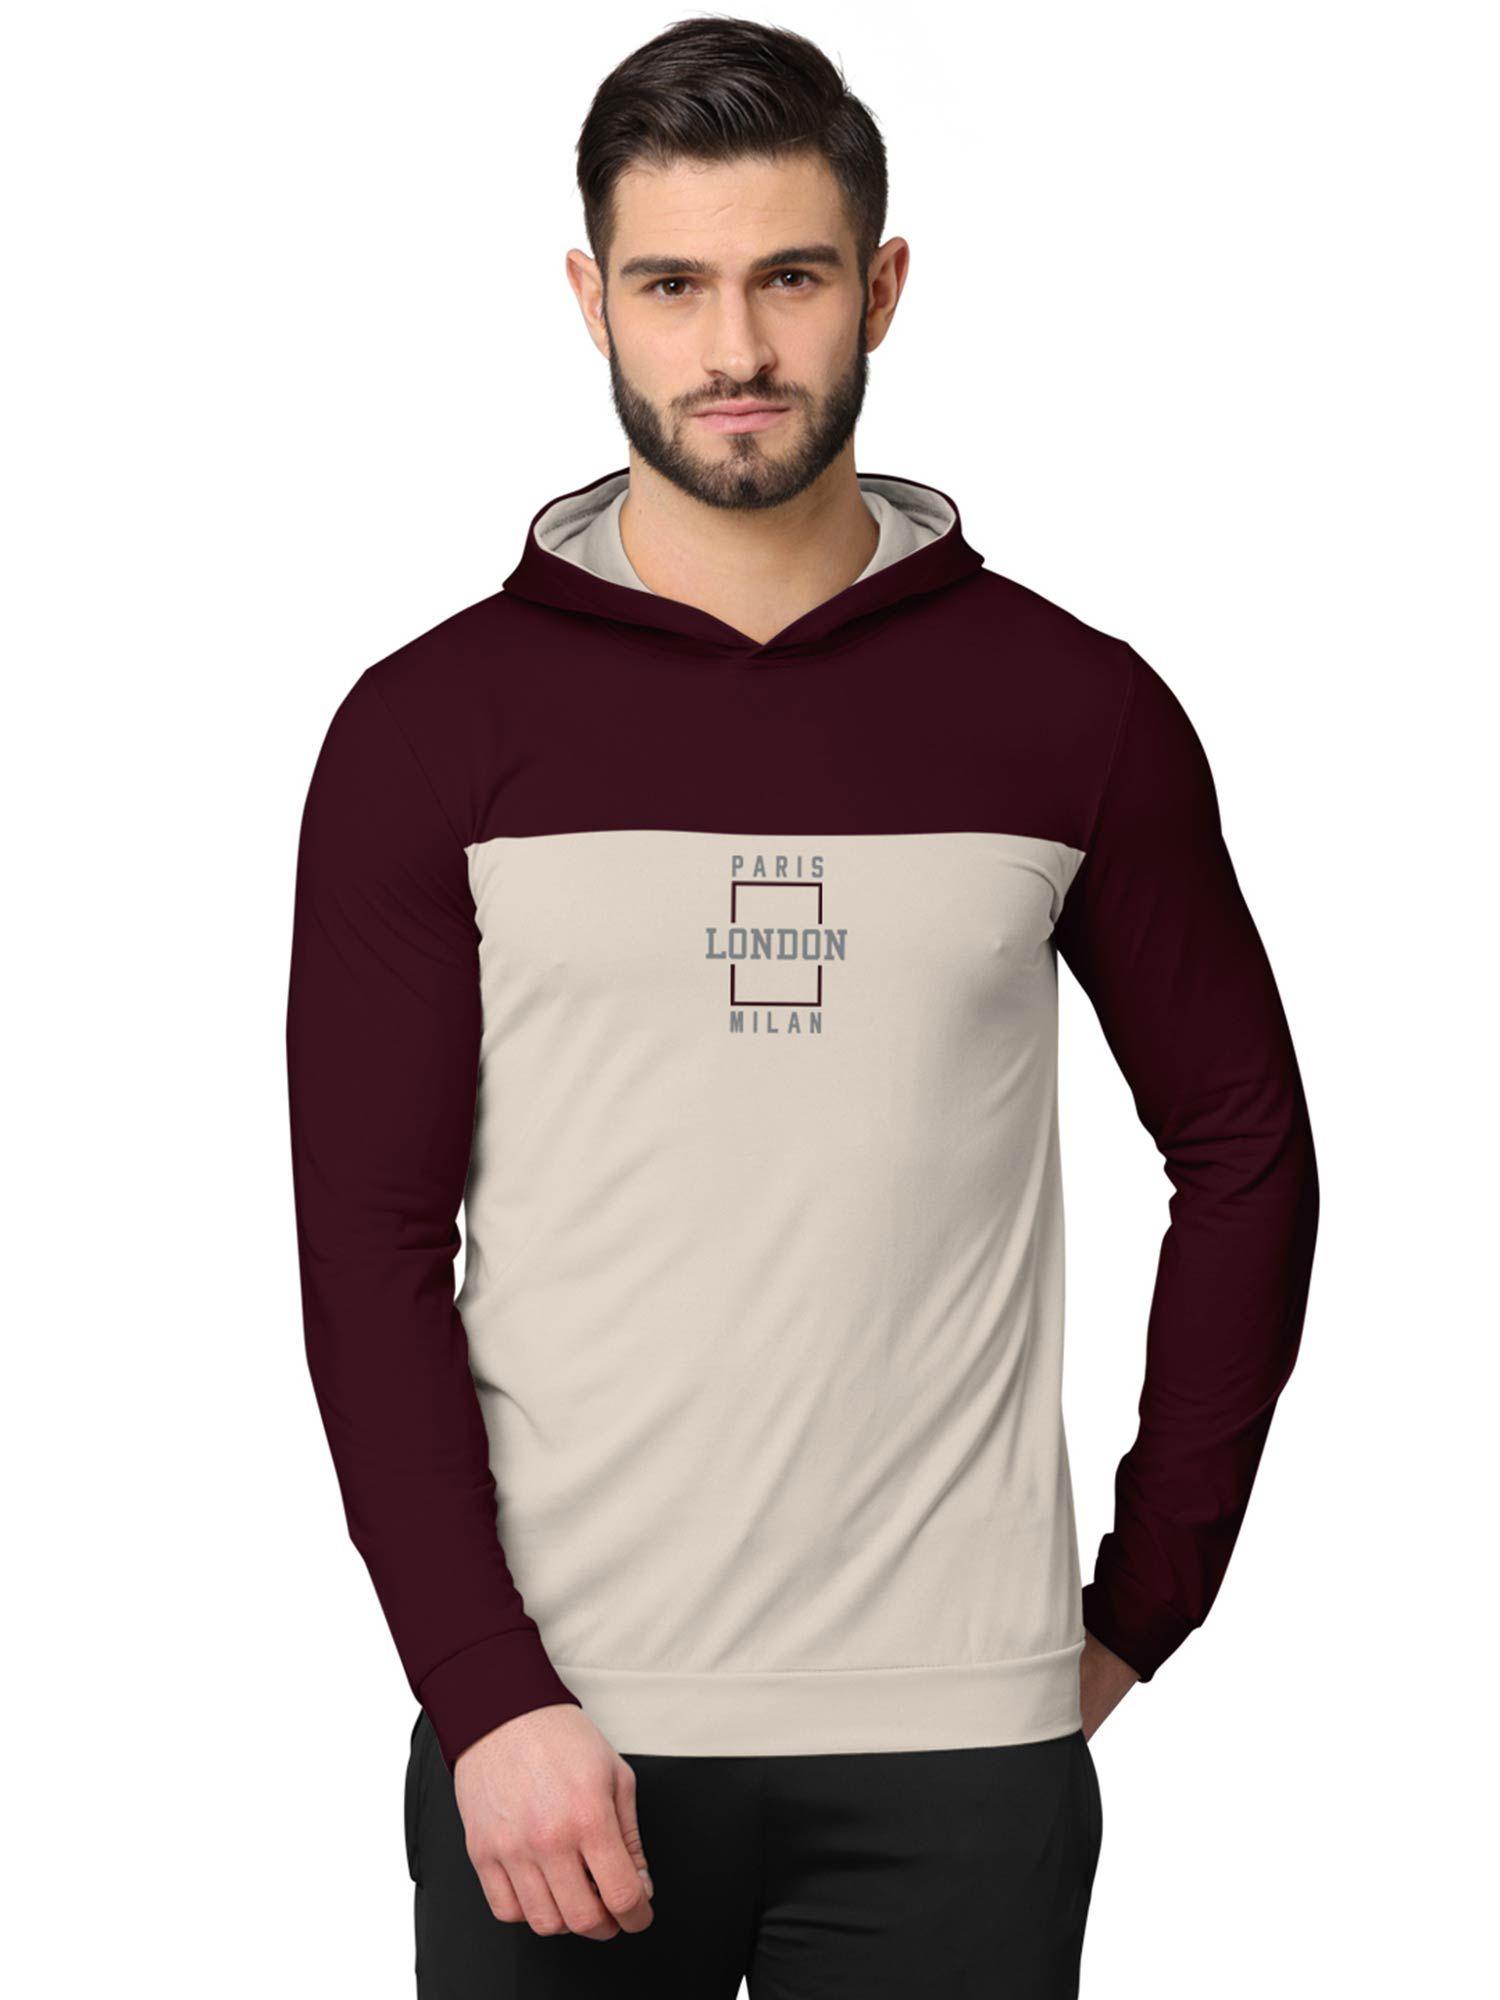 colorblock full sleeve hooded sweatshirts for men burgundy and beige